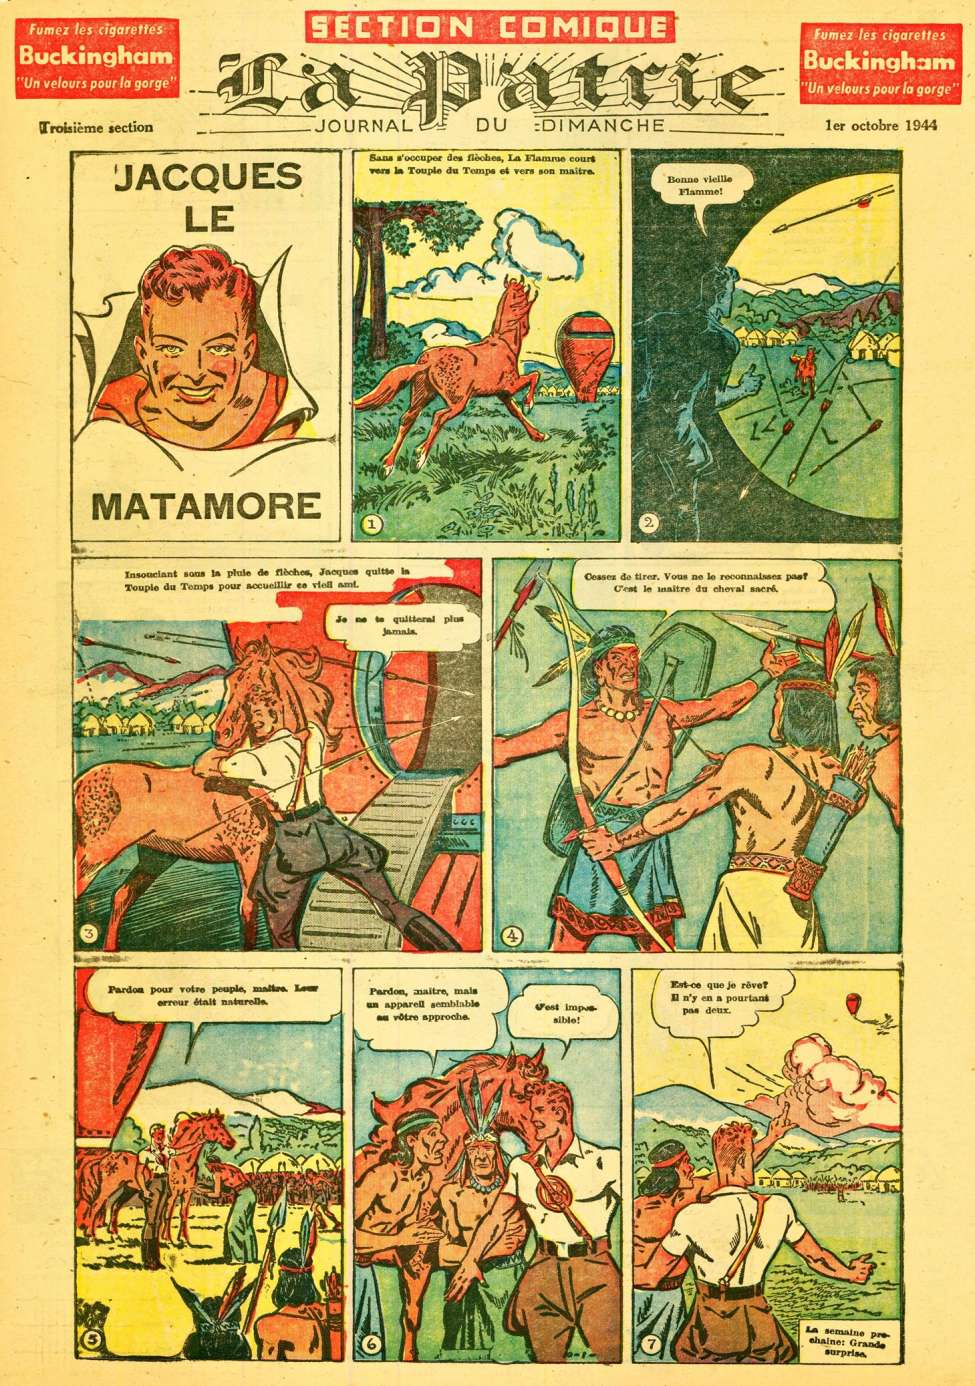 Book Cover For La Patrie - Section Comique (1944-10-01)